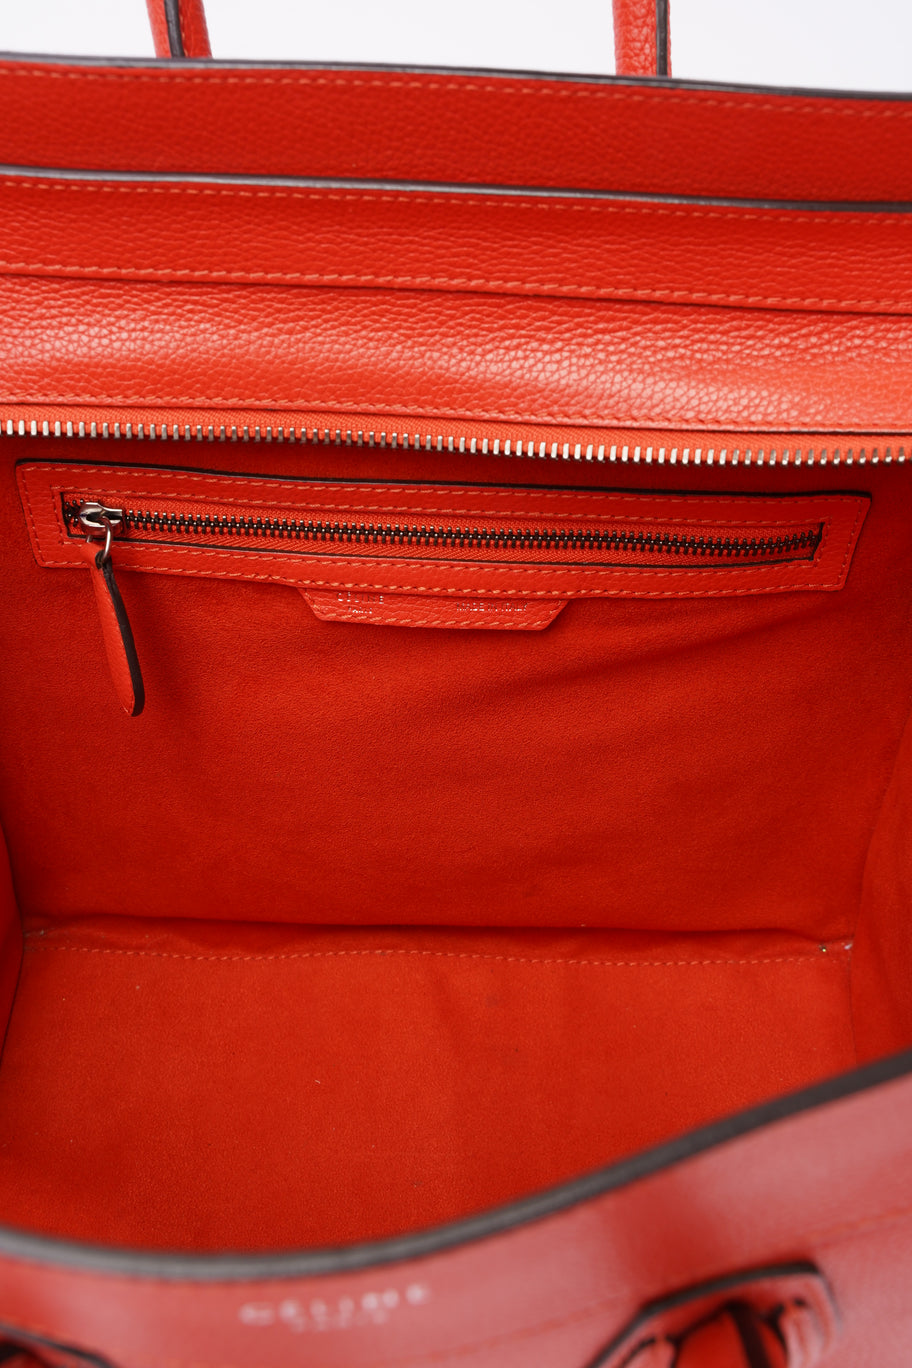 Mini Luggage Orange Grained Leather Image 11